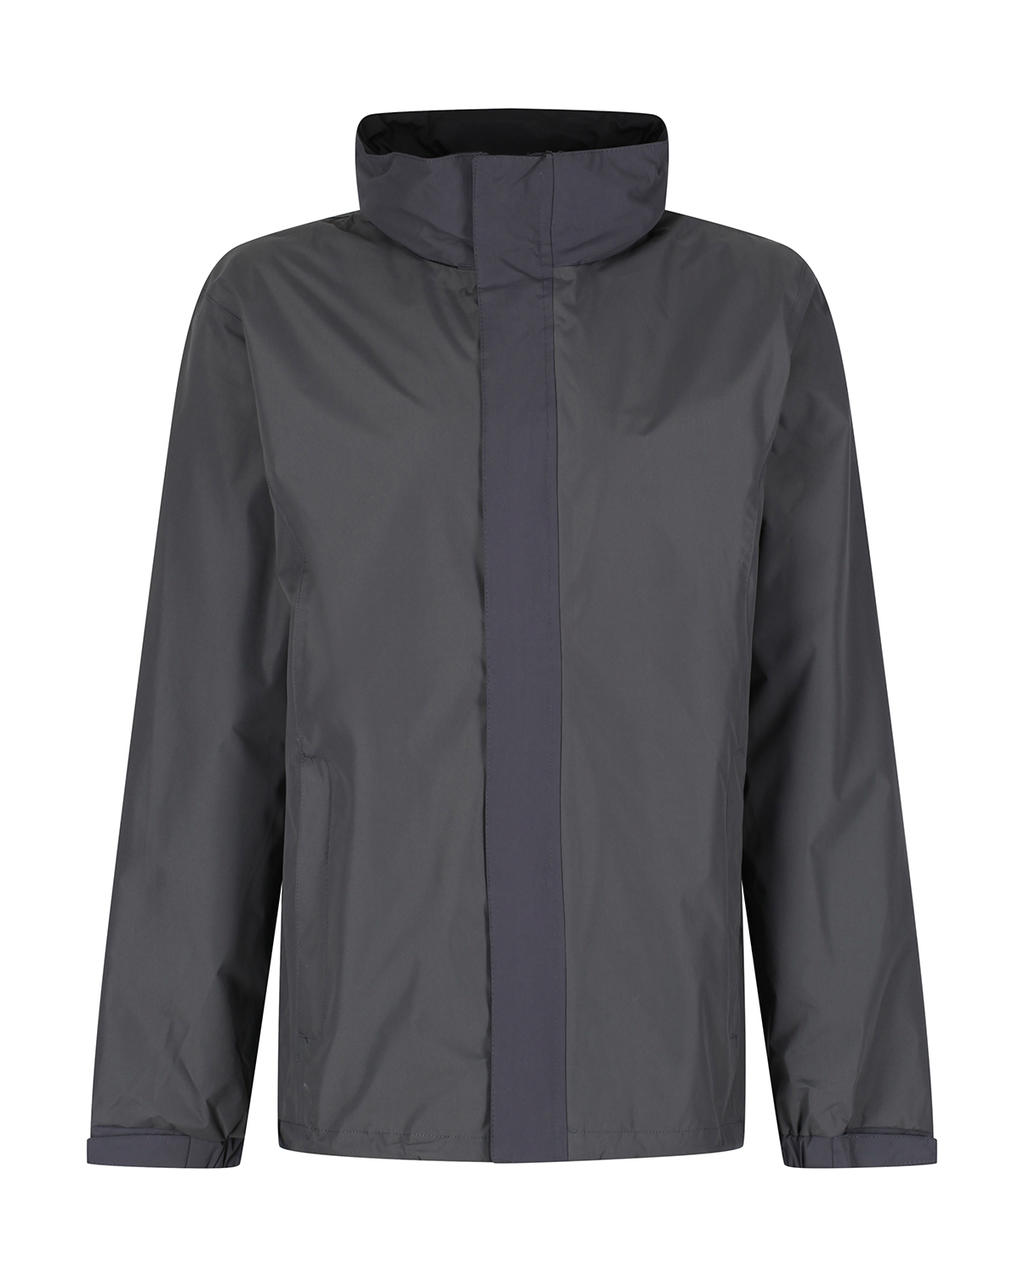  Ardmore Jacket in Farbe Seal Grey/Black